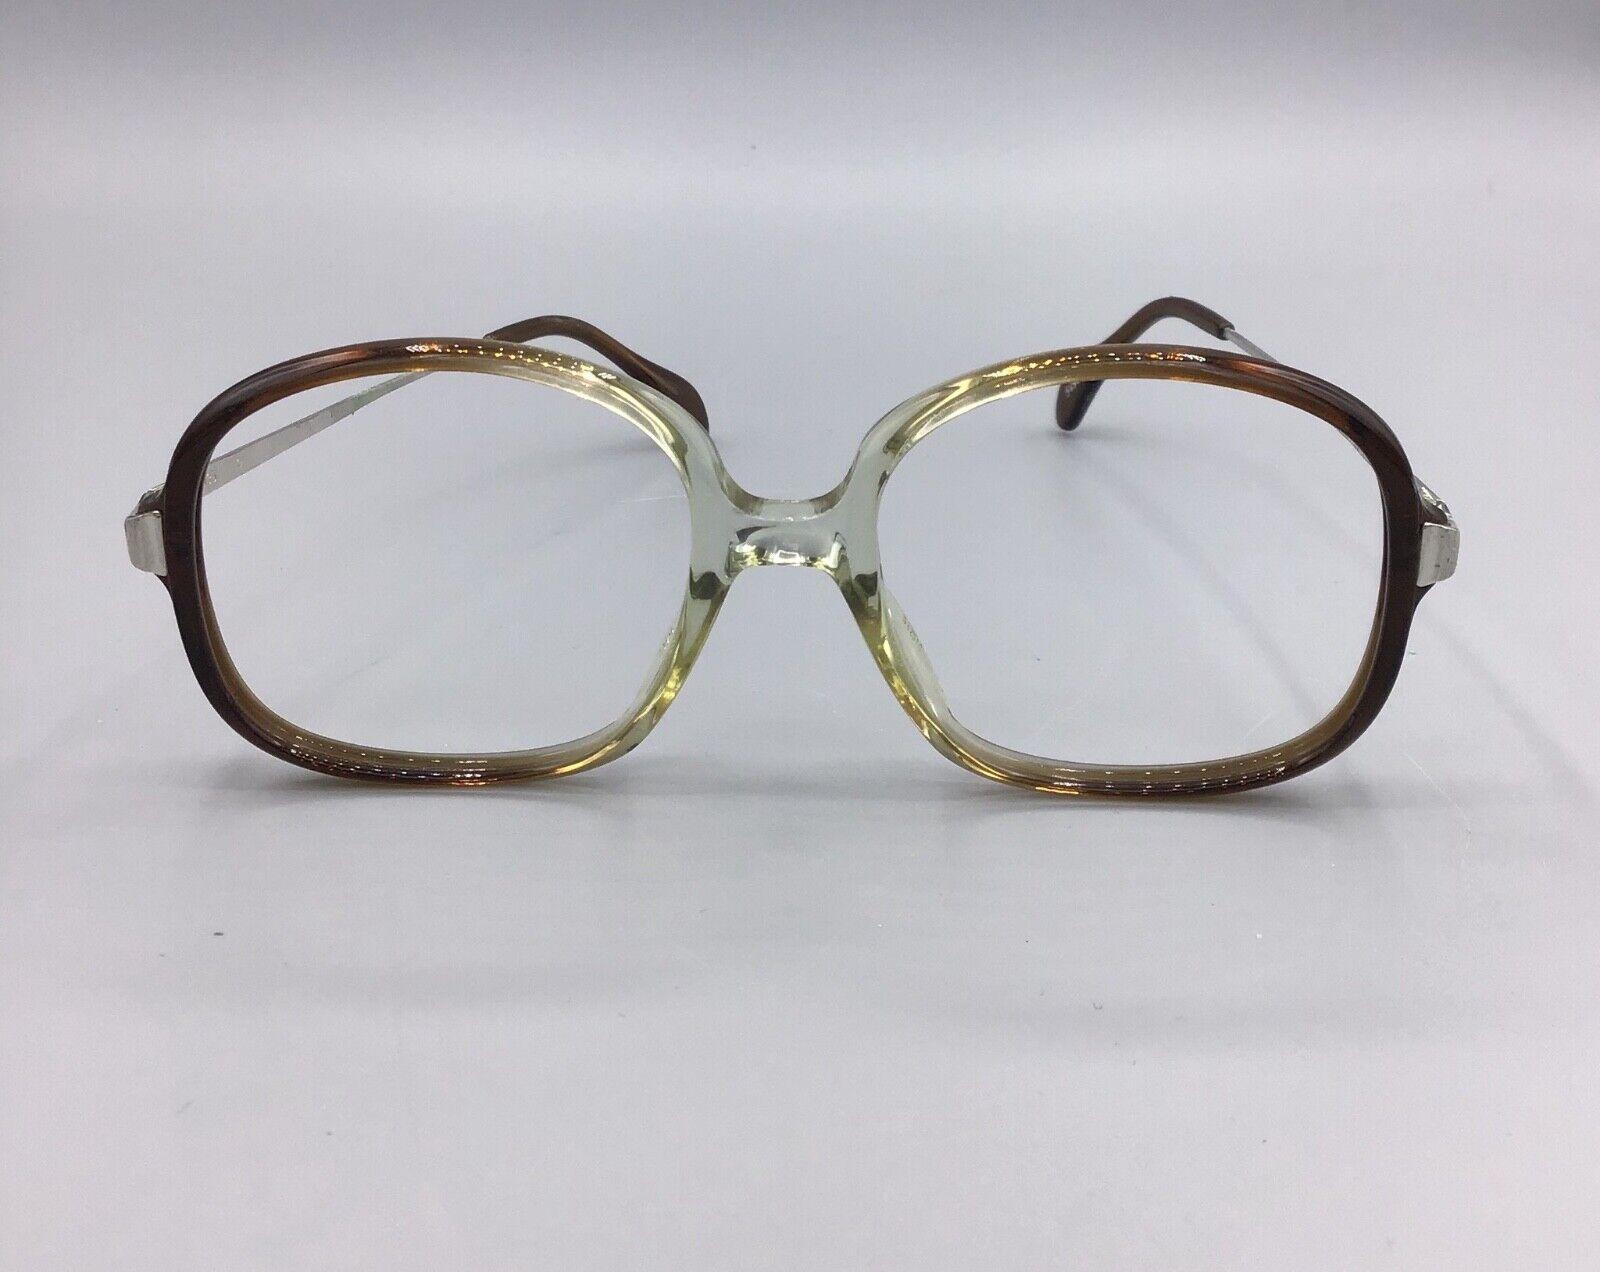 Metzler occhiale vintage Eyewear frame brillen lunettes Made in Germany 5451 048